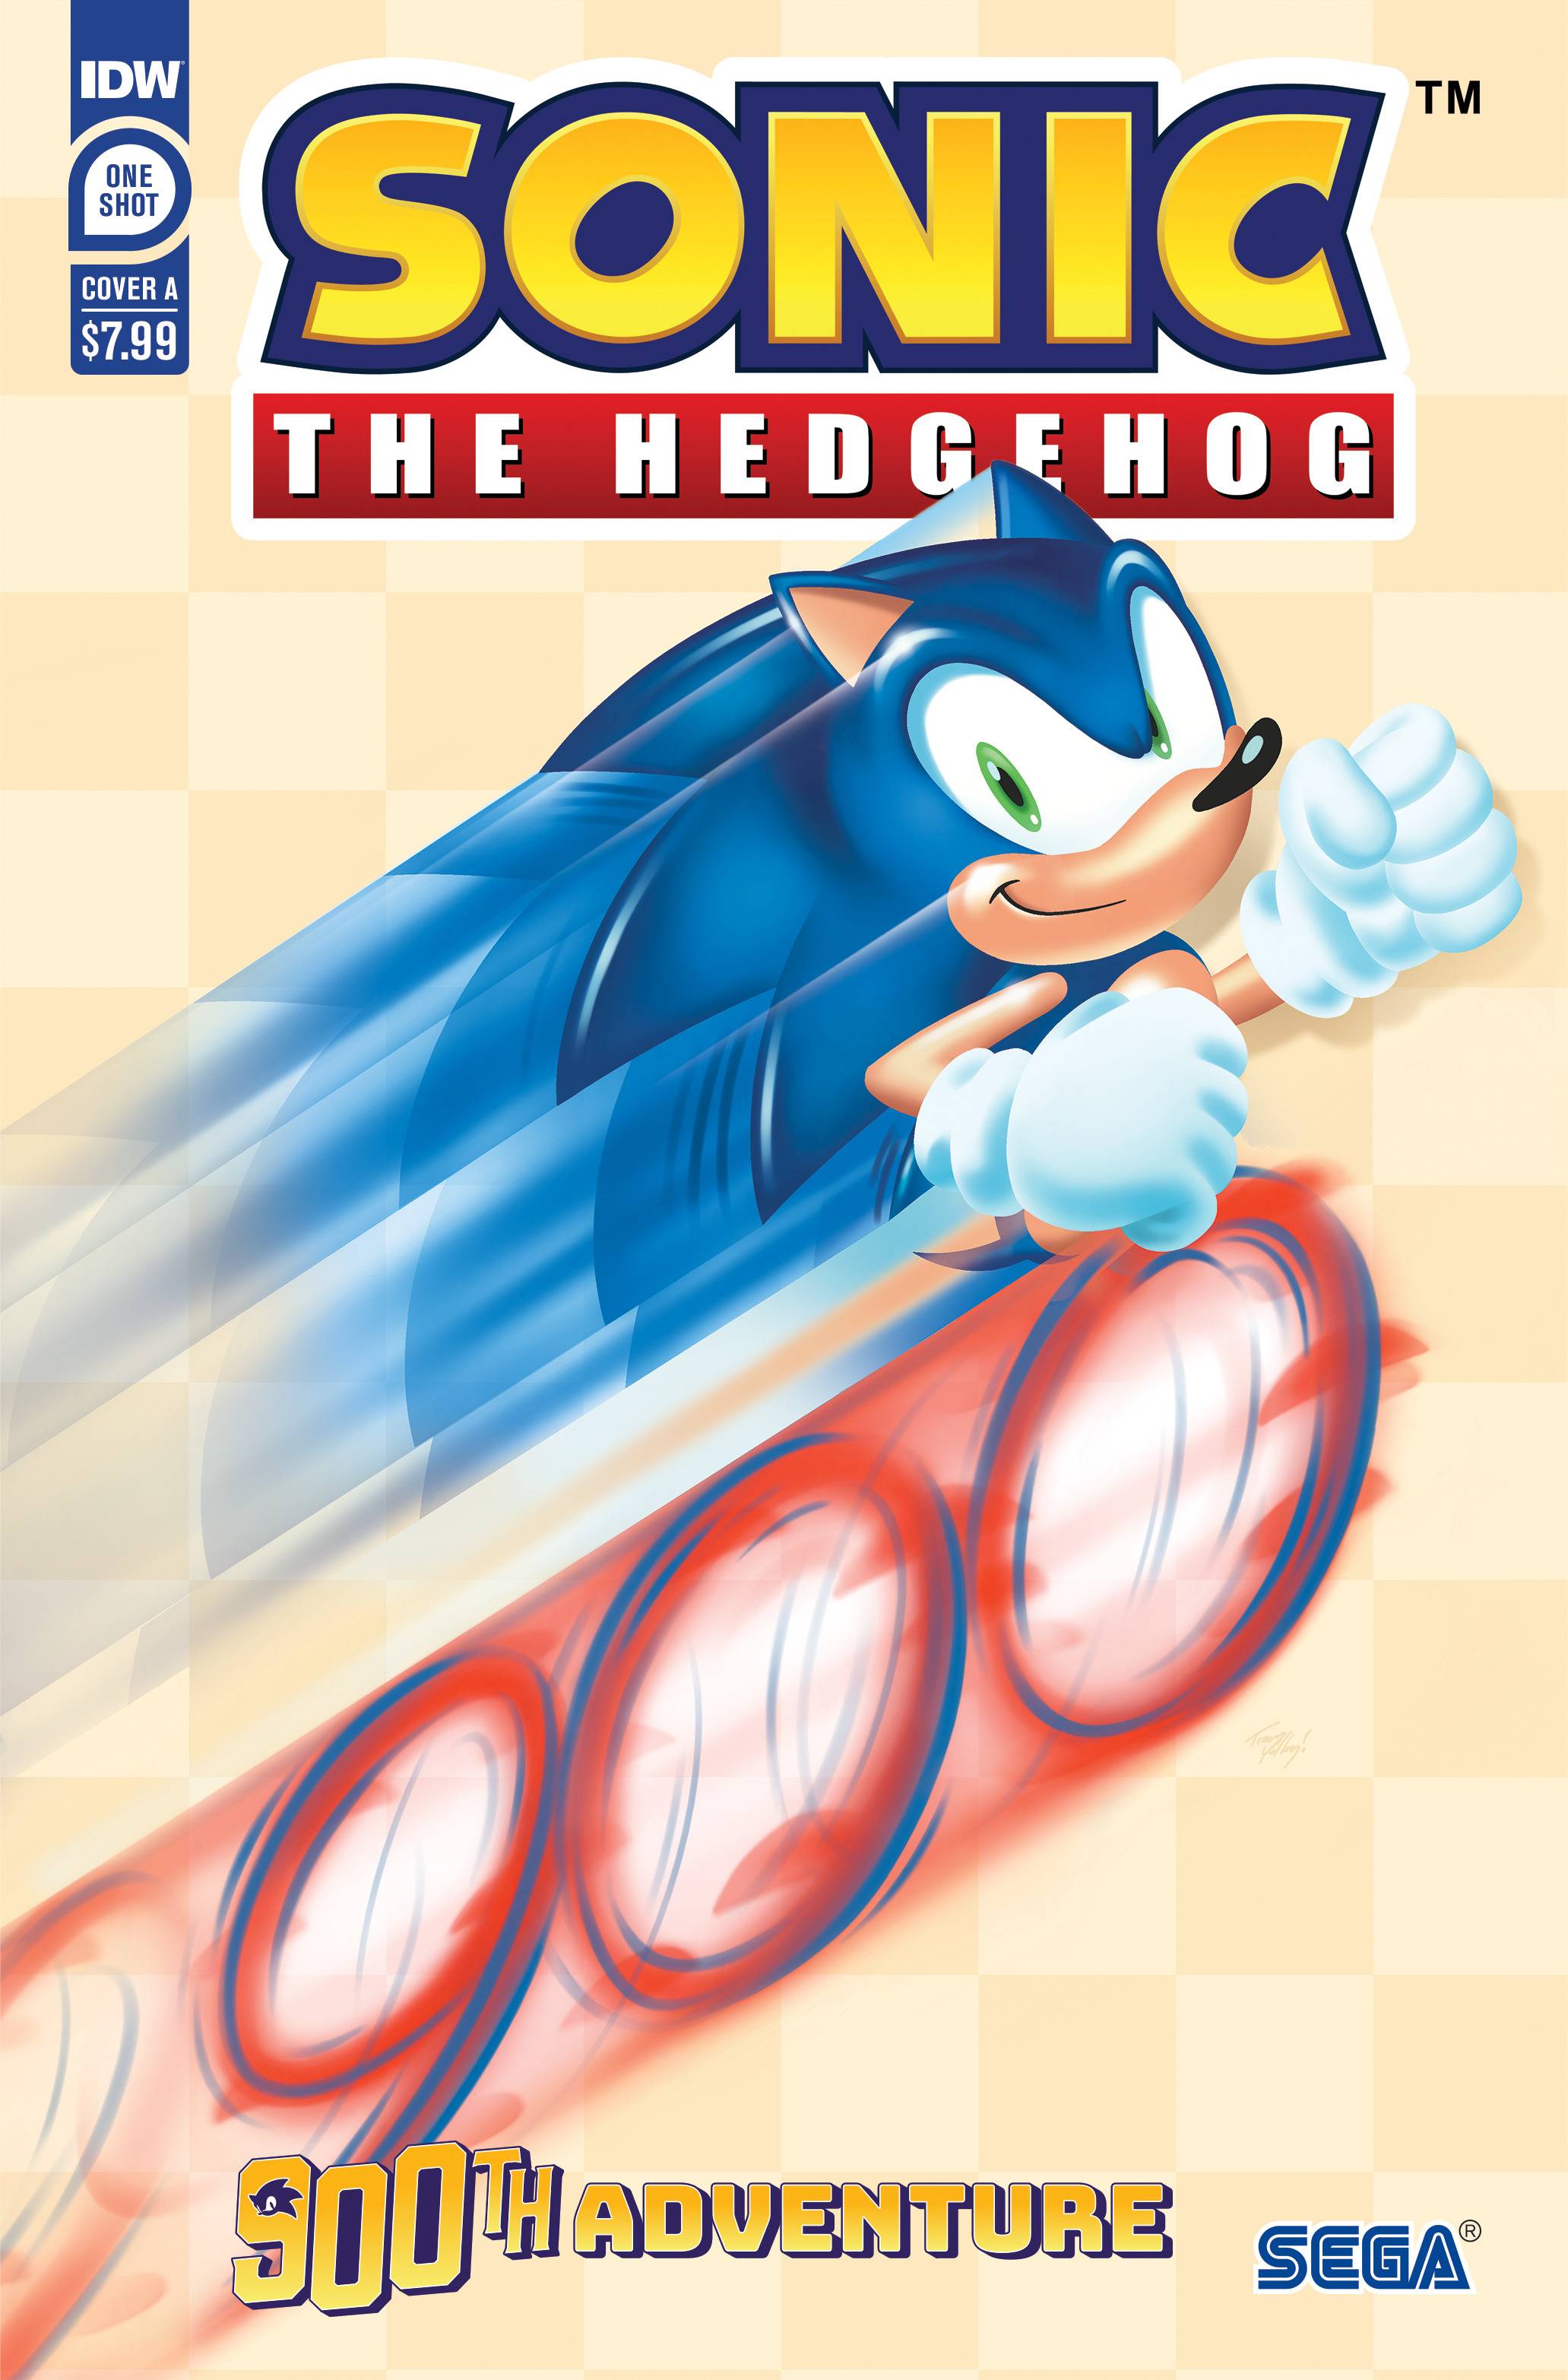 Sonic the hedgehog 900th adventure